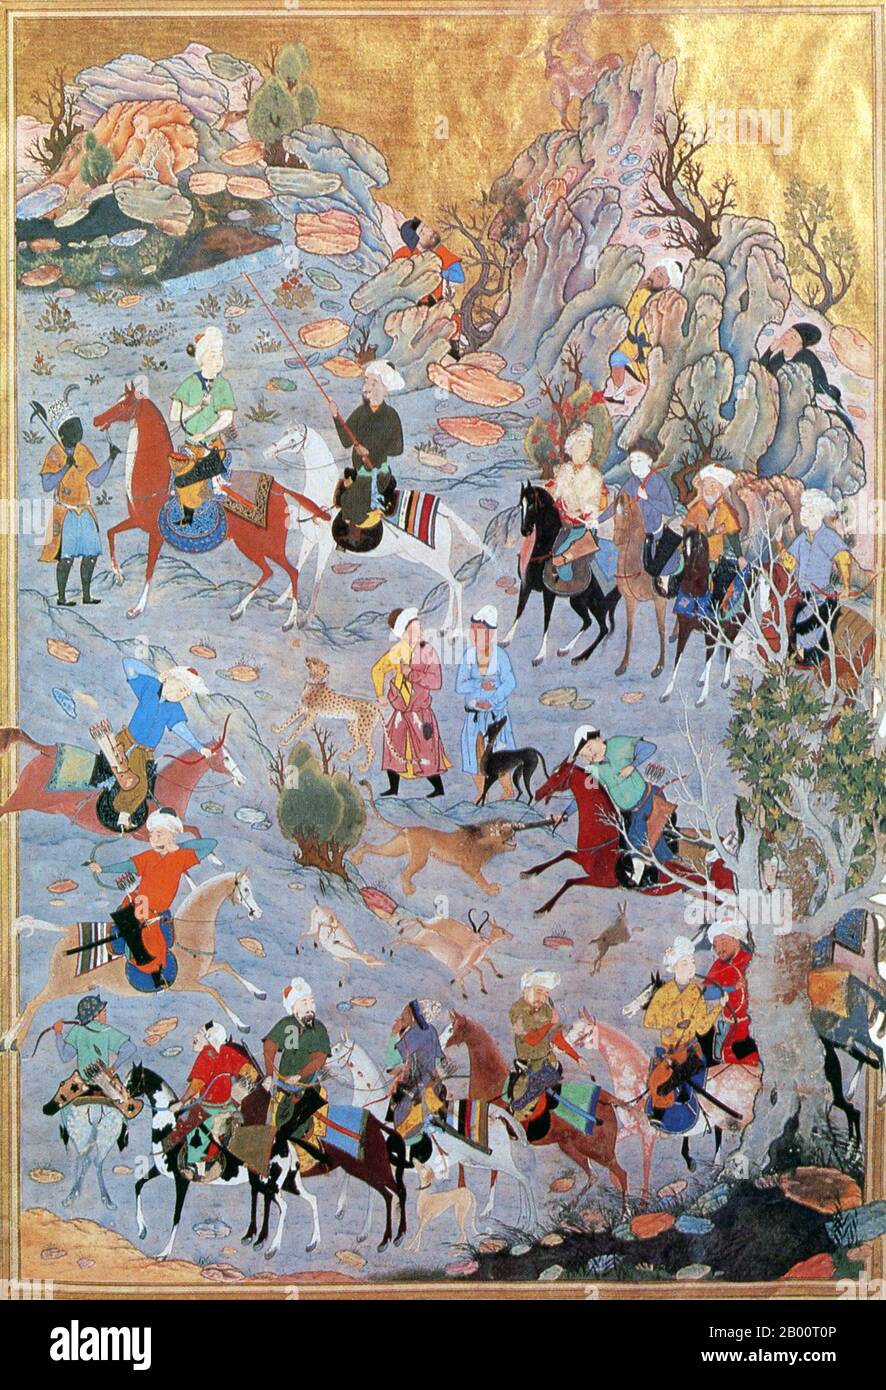 Afghanistan: Tardo 15 ° secolo pittura di una scena di caccia dal Bahist  hast di Kamal al-DIN Bihzad. Kamal ud-DIN Behzad Herawi (c.. 1450 - c.  1535), conosciuto anche come Kamal al